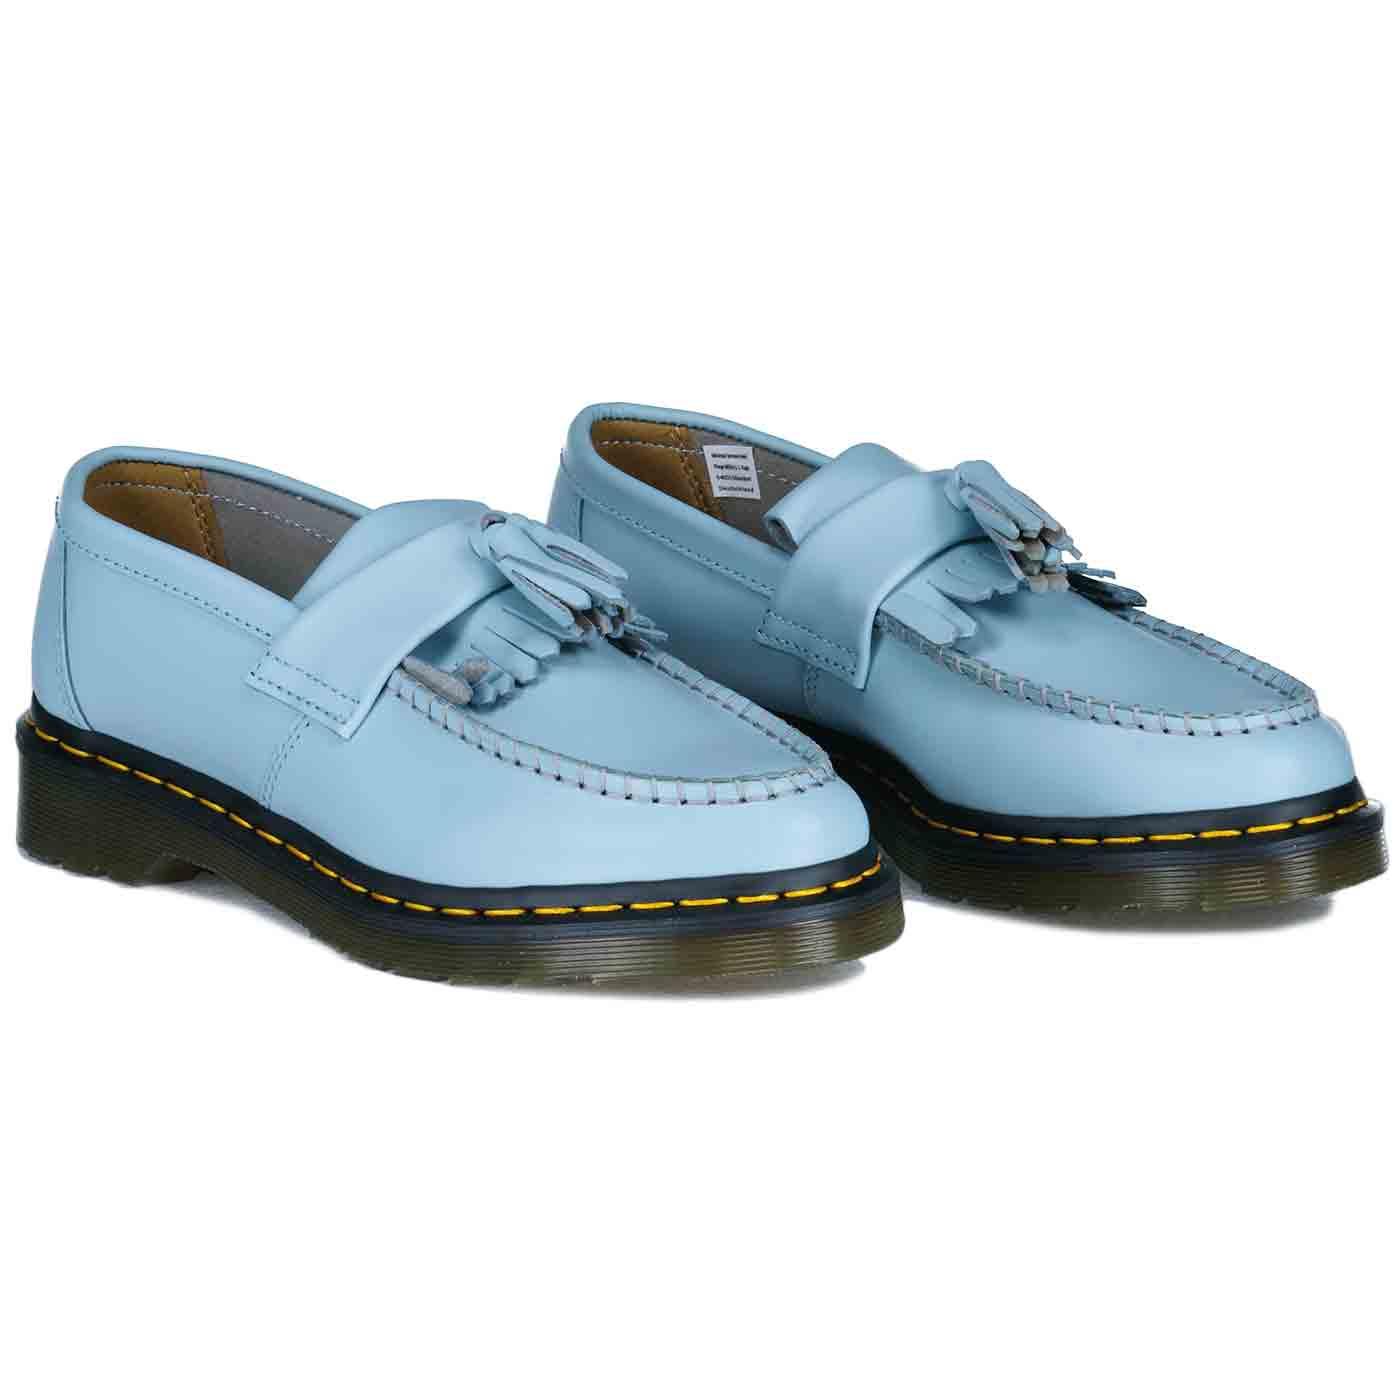 Adrian YS DR MARTENS Retro Mod Tassel Loafers in Card Blue